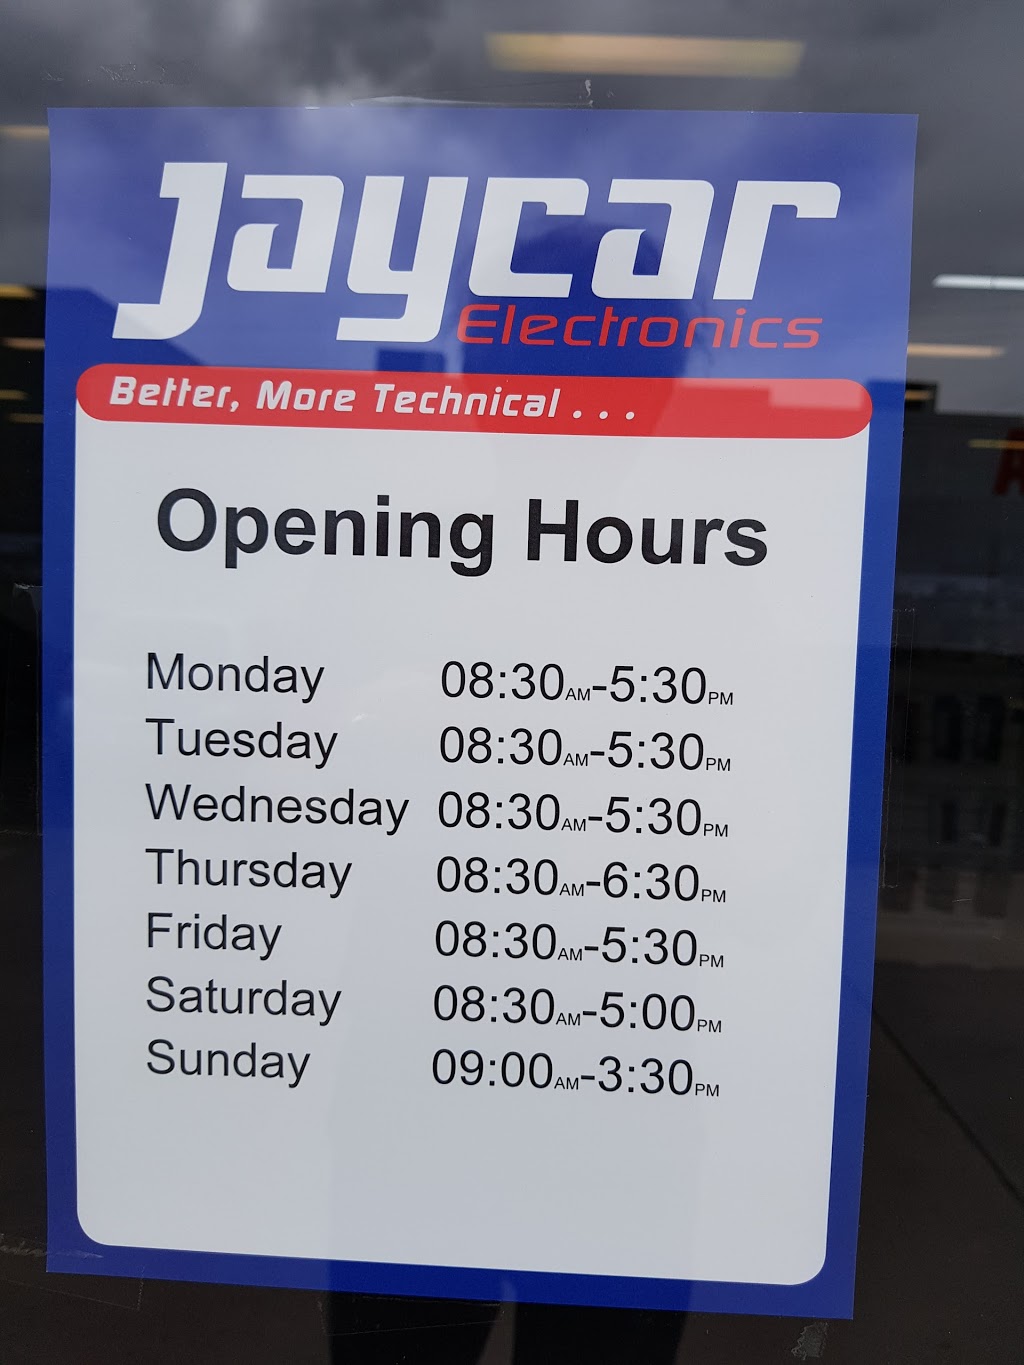 Jaycar Electronics Caboolture | 37-41 Morayfield Rd, Caboolture South QLD 4510, Australia | Phone: (07) 5432 3152